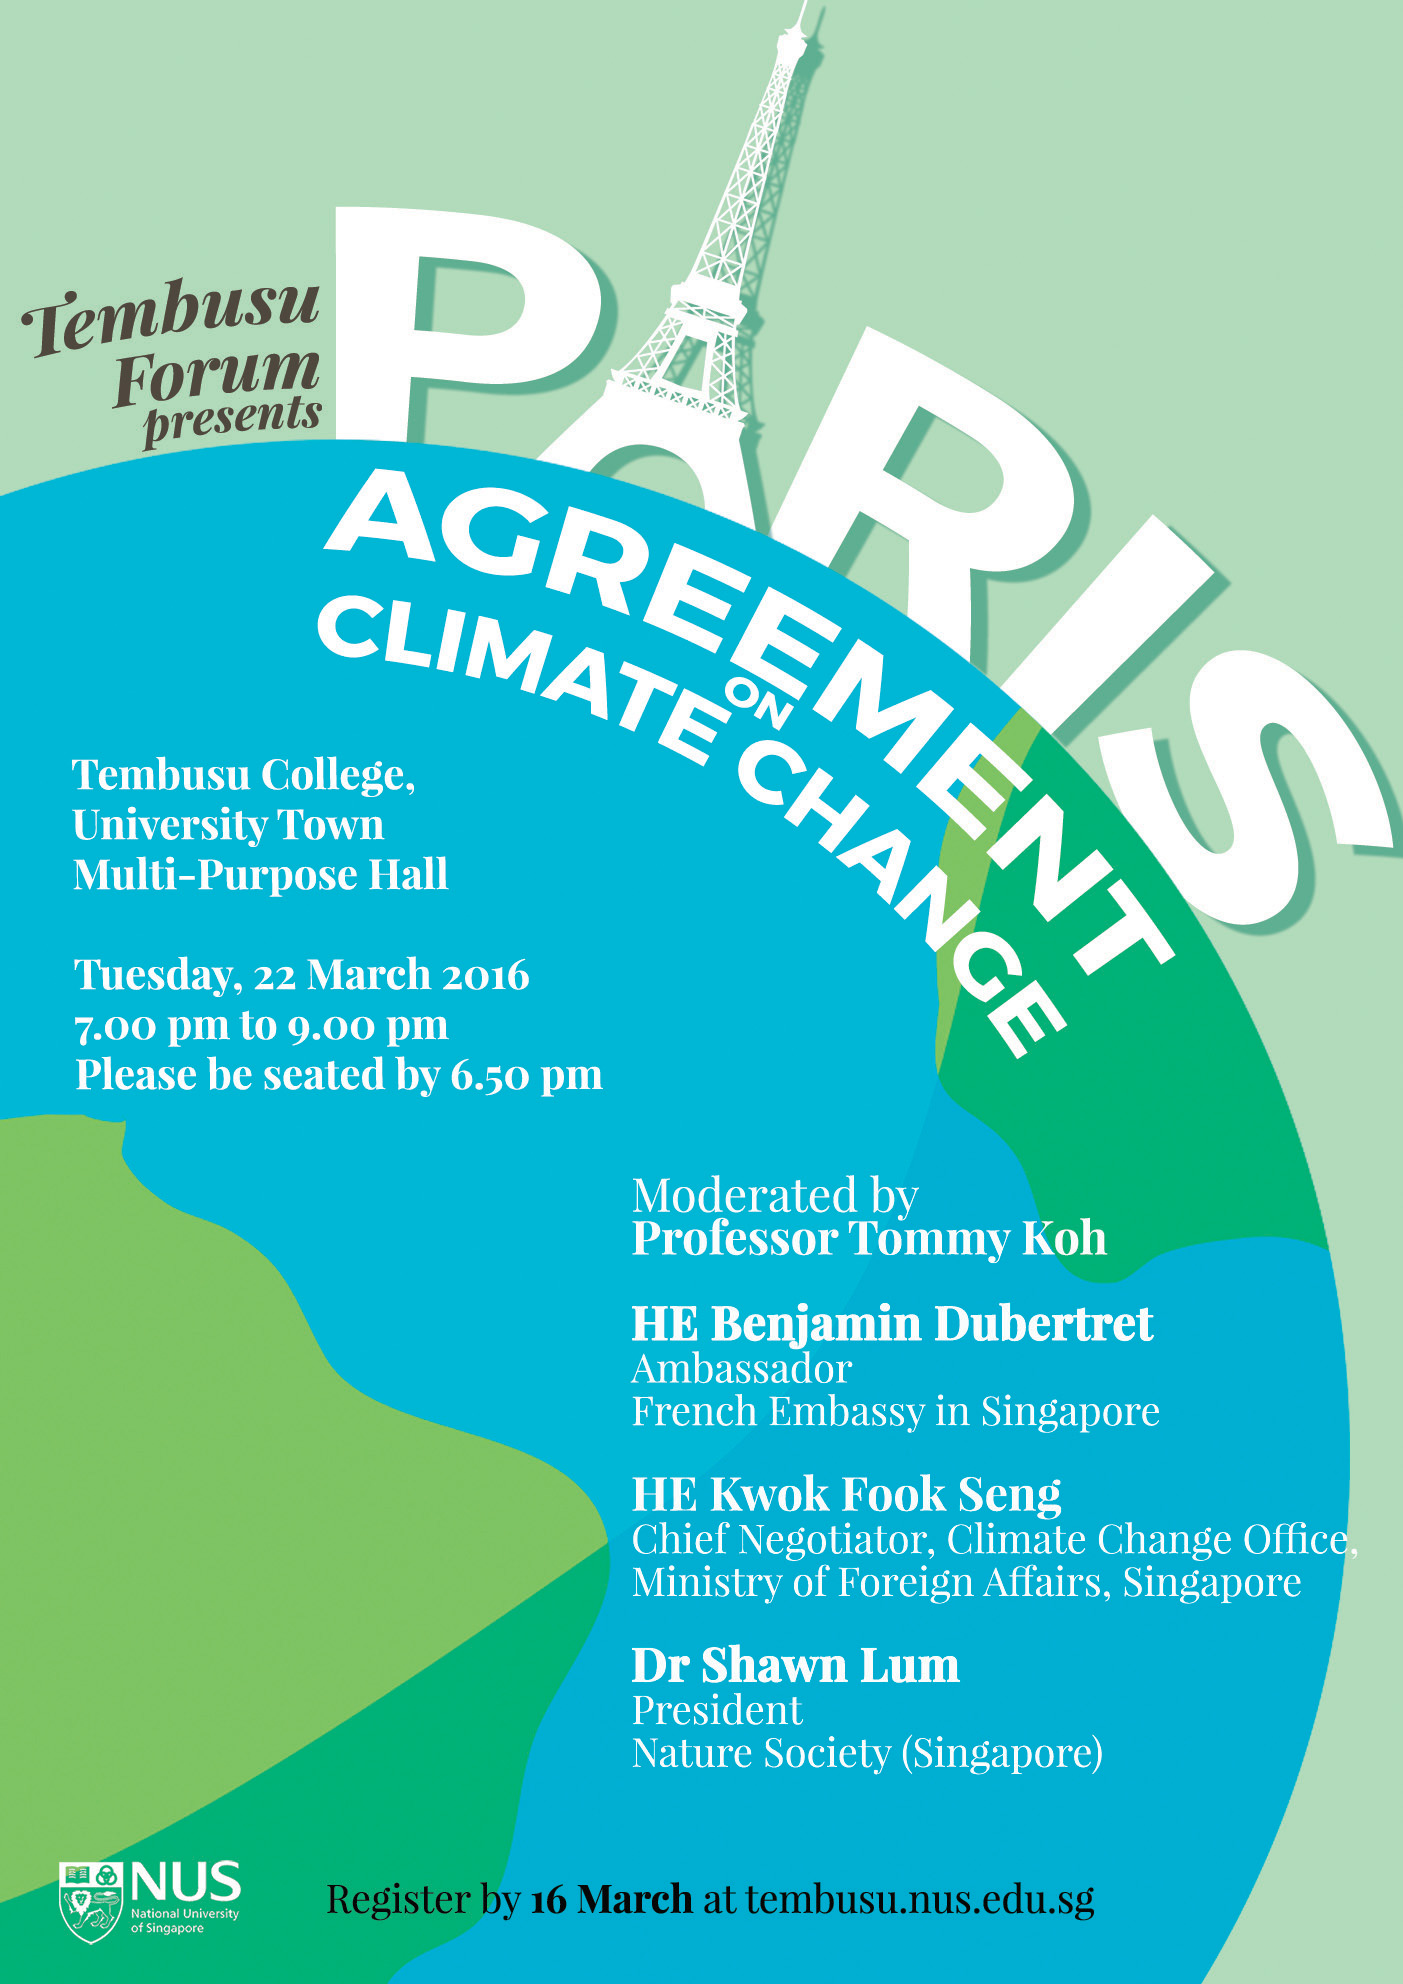 Tembusu Forum: Paris Agreement on Climate Change